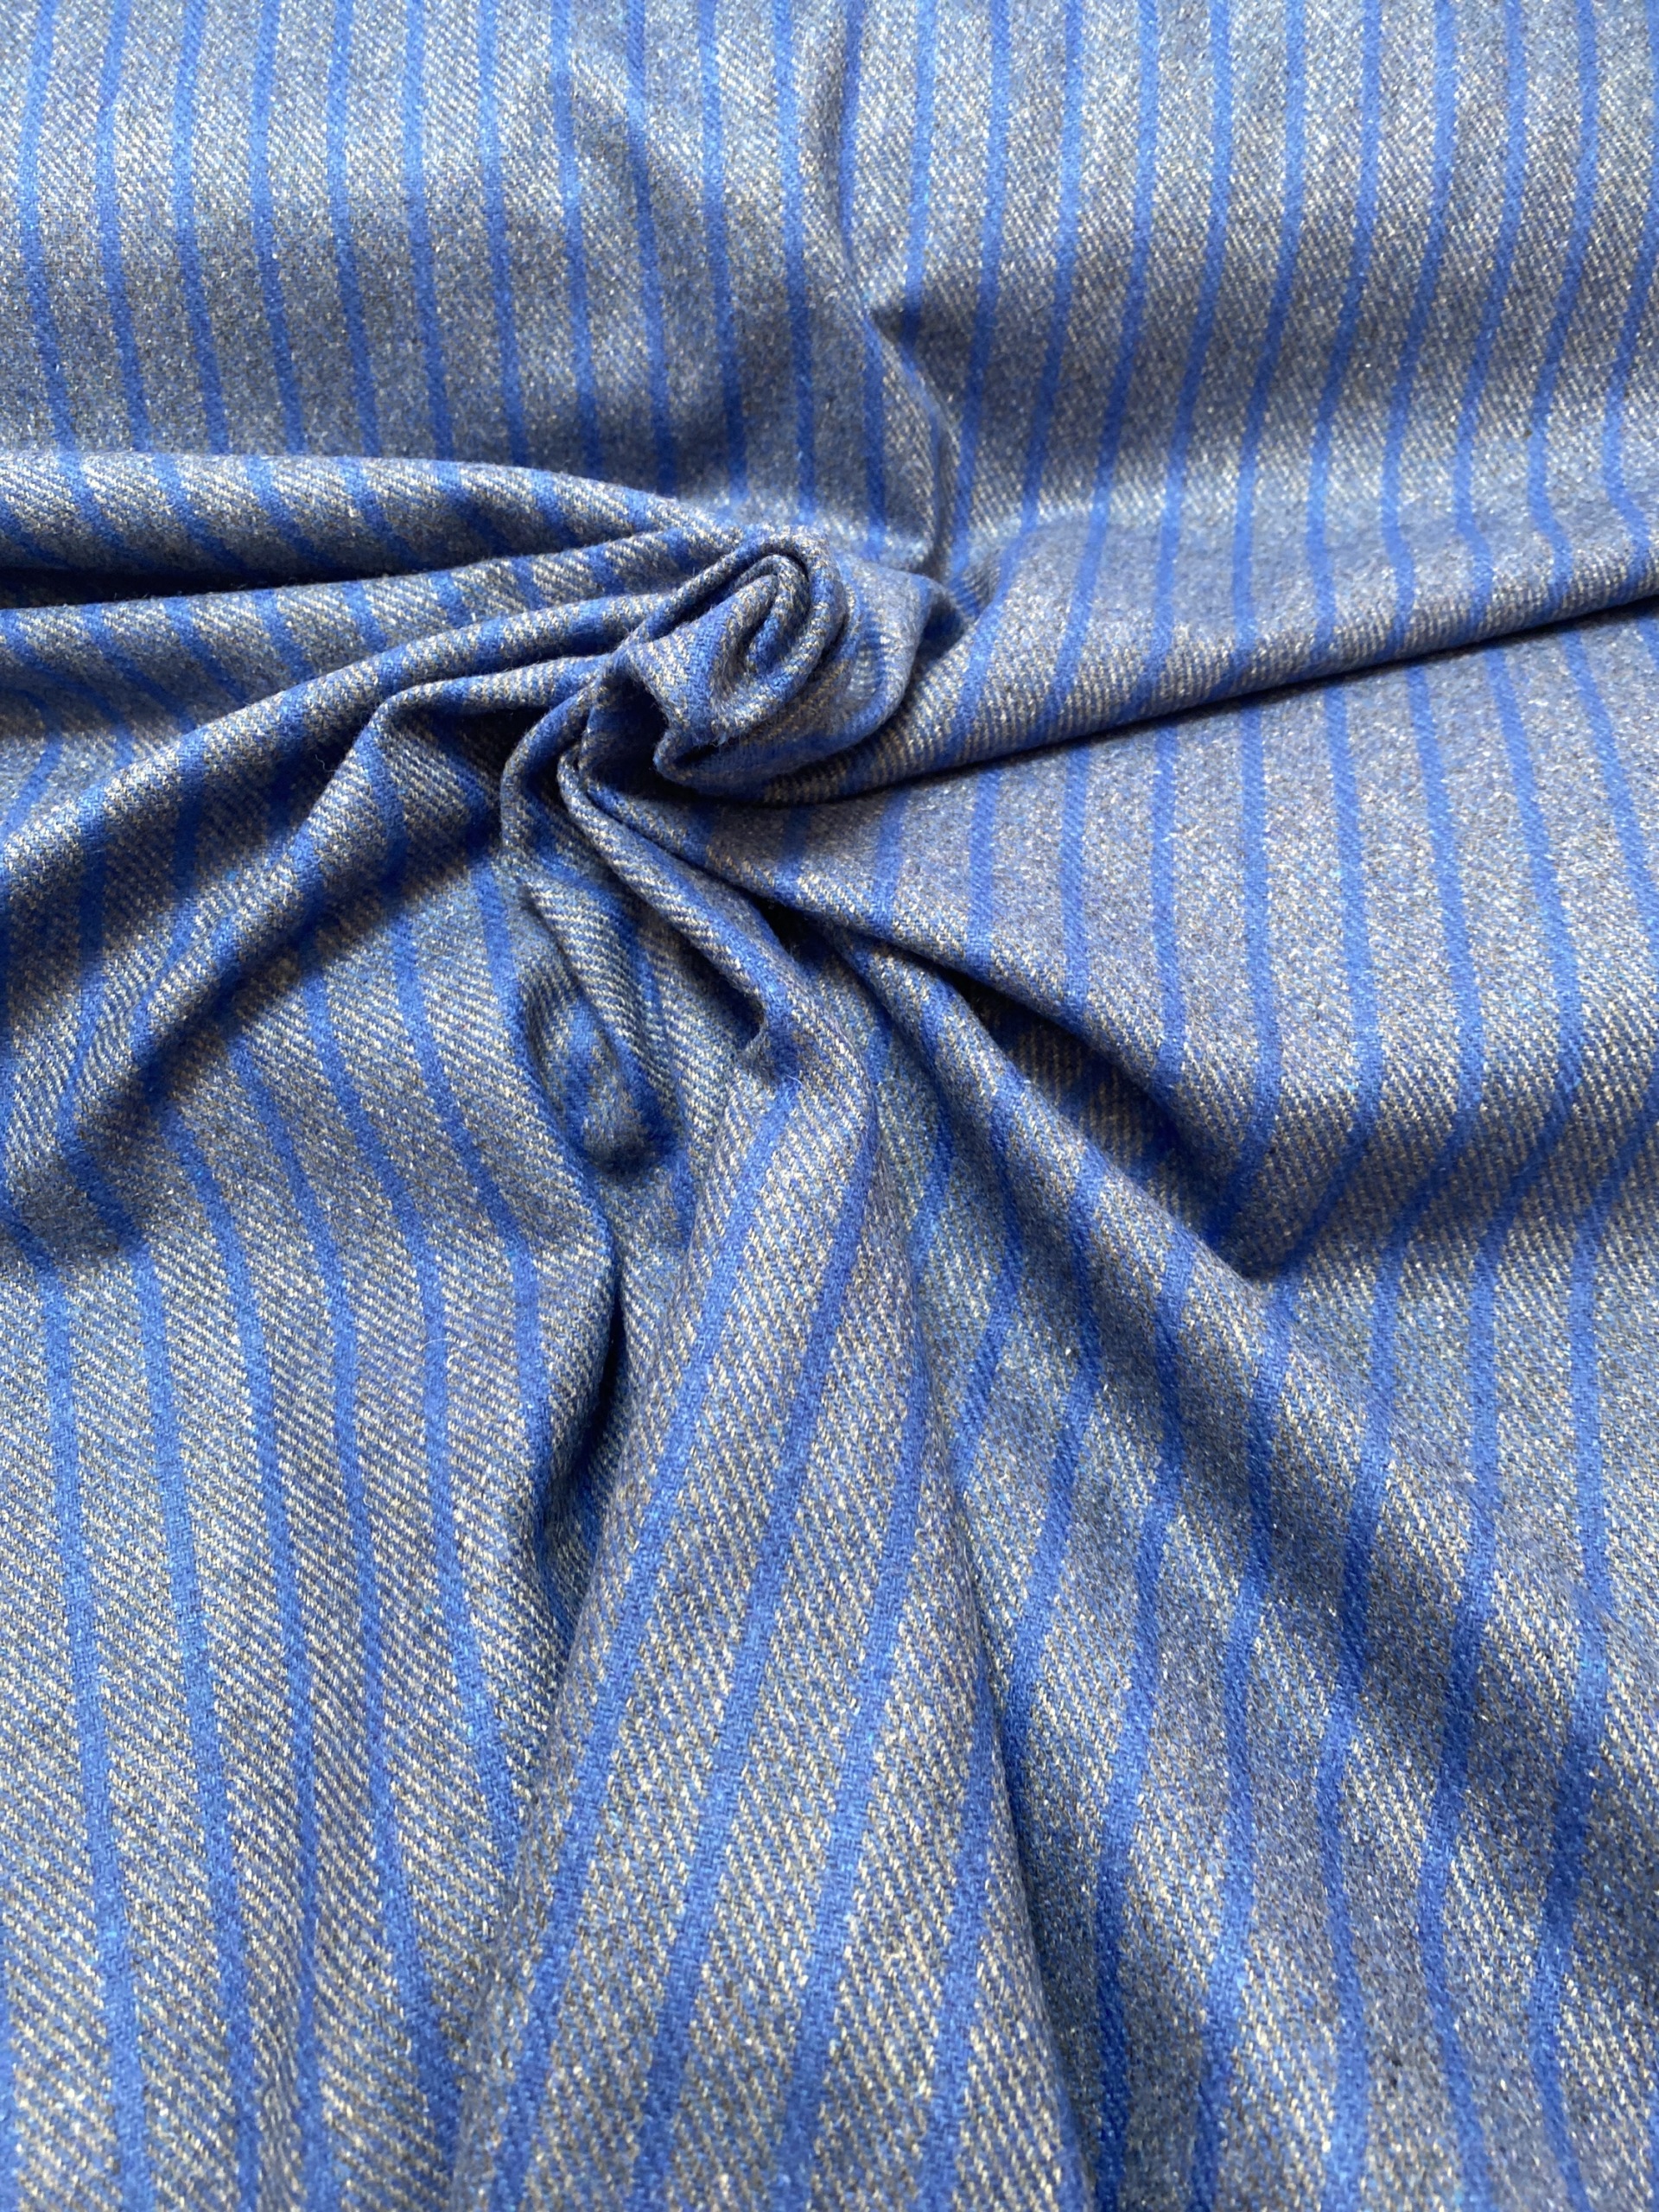 blue gray pin stripe fabric